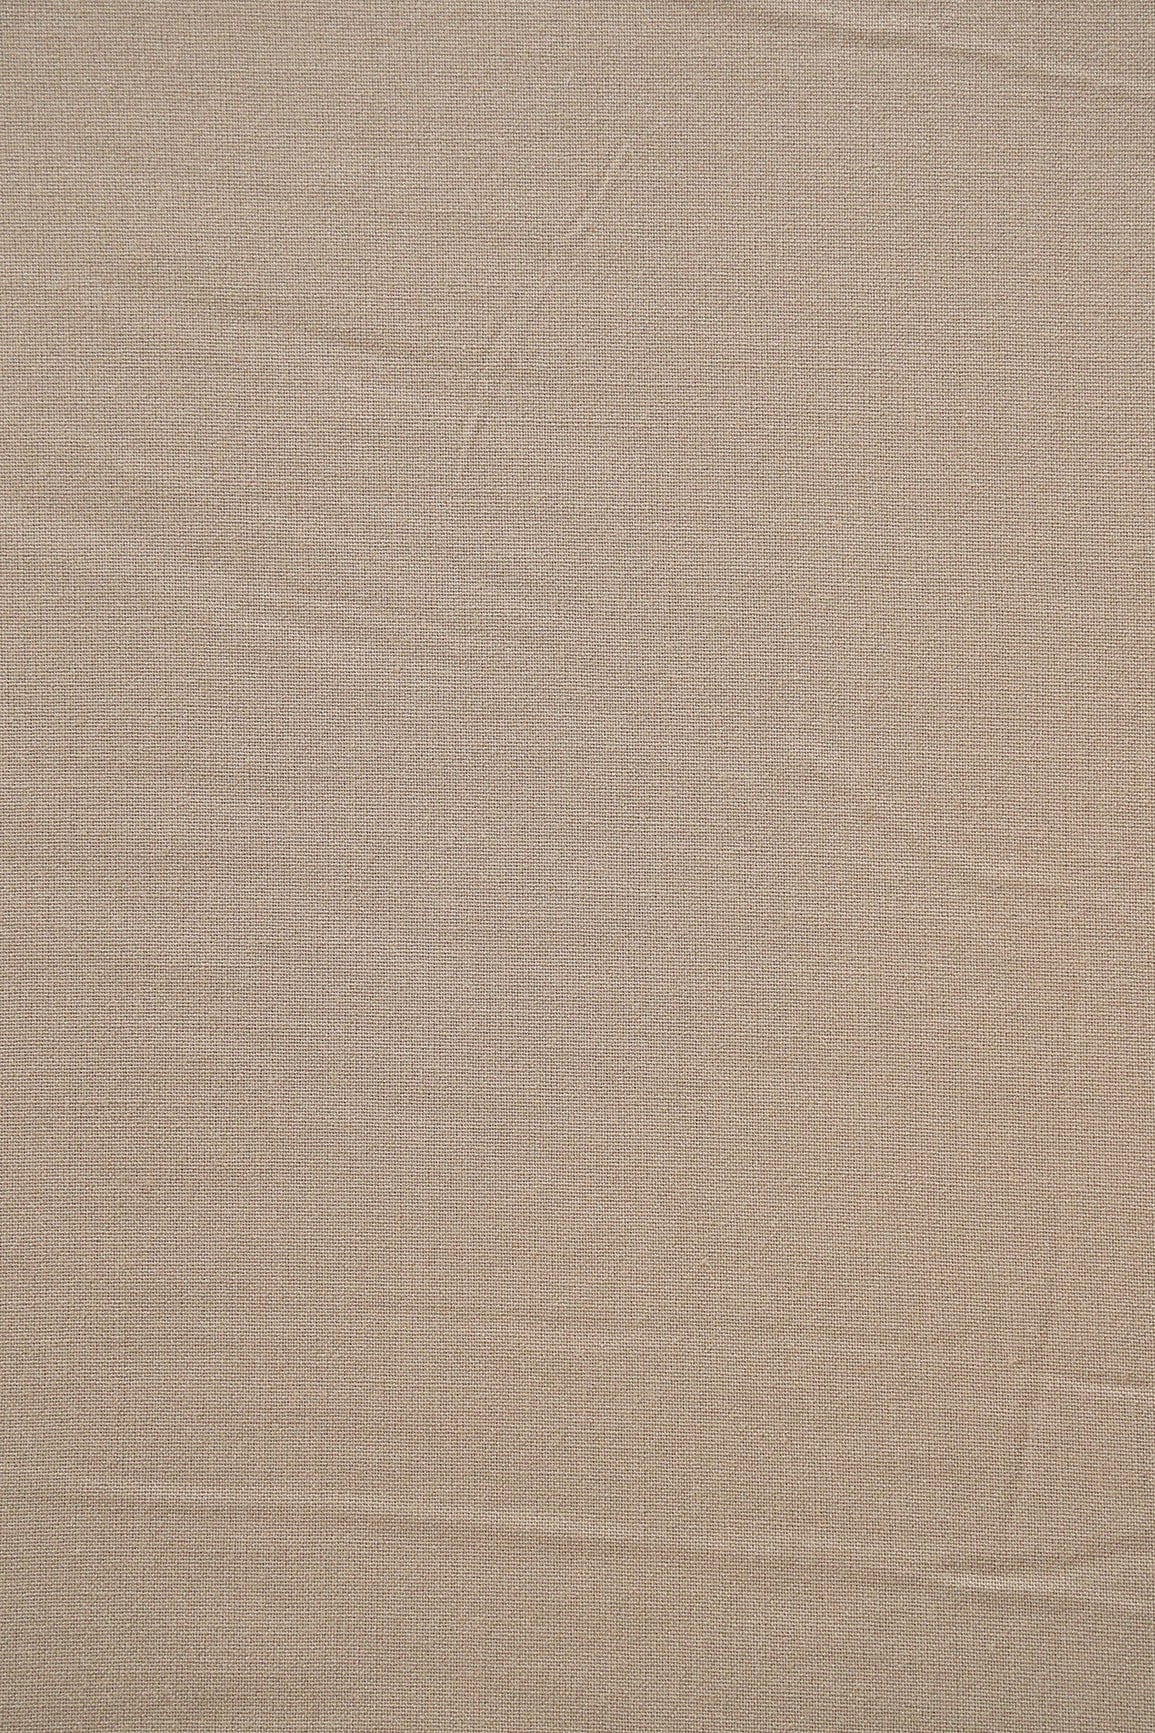 doeraa Plain Fabrics Beige Dyed Rayon Fabric